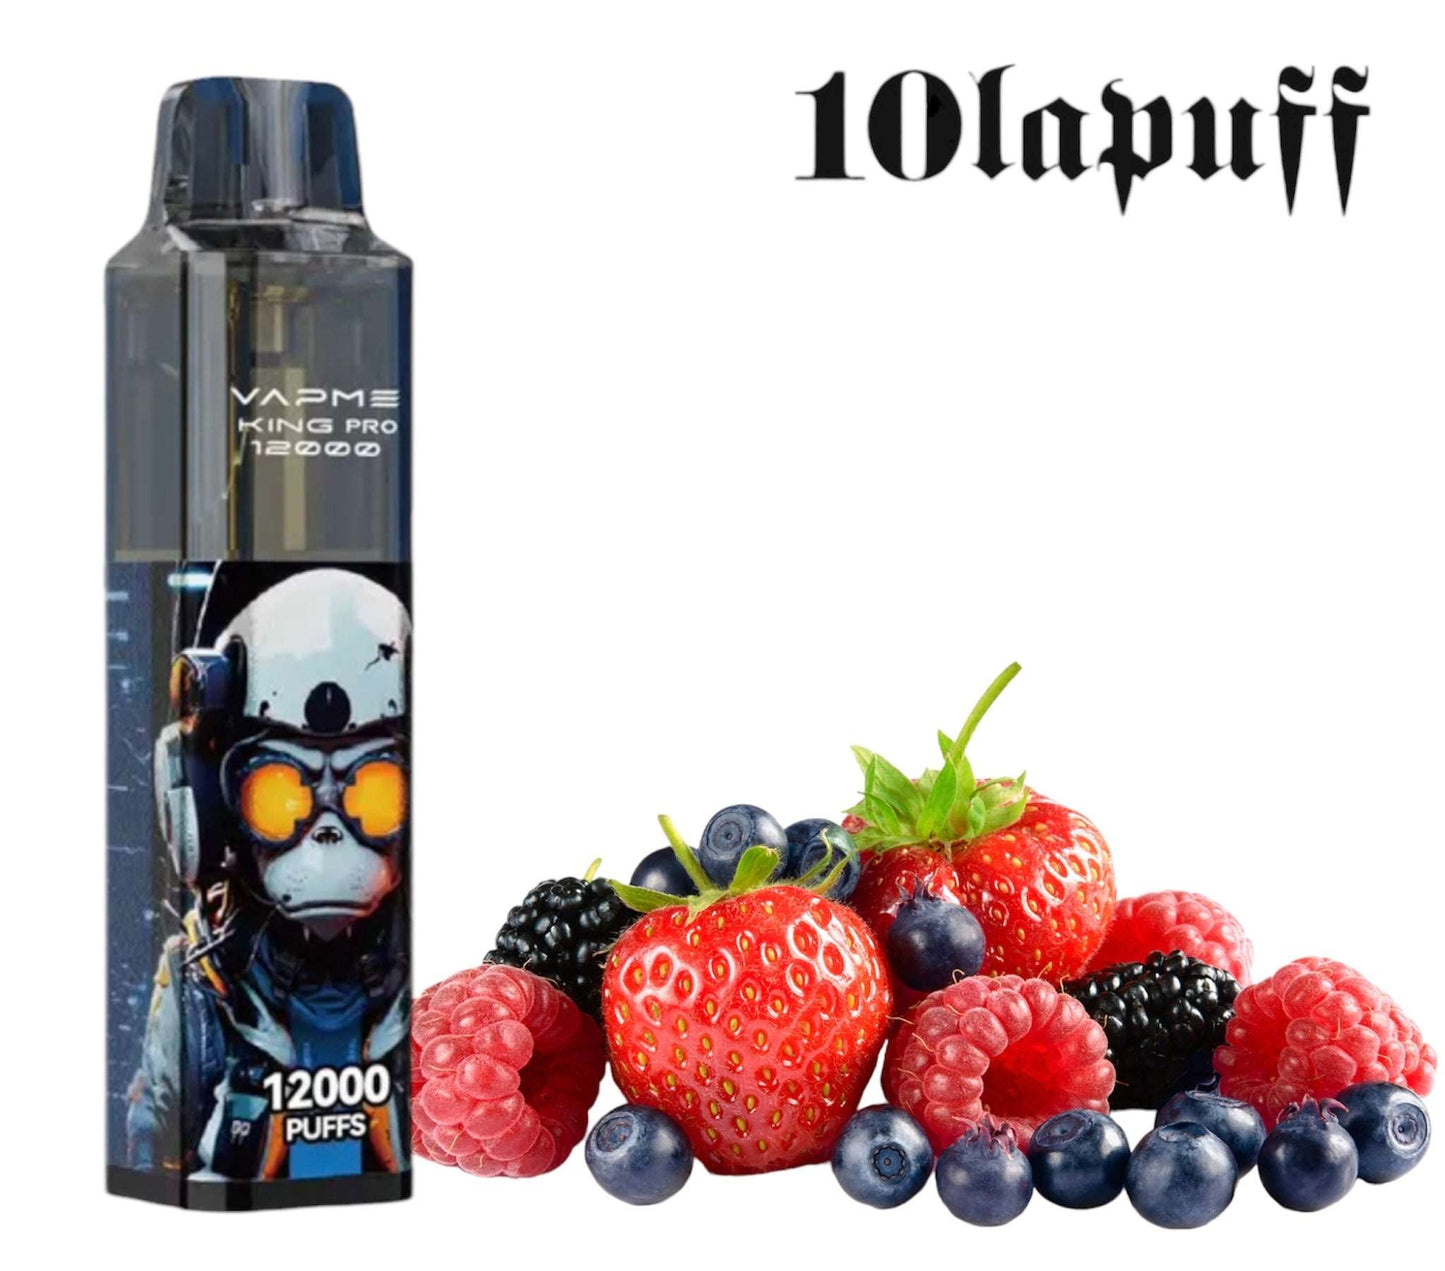 PUFF 12000 VAPME PRO - Mix fruits rouge -